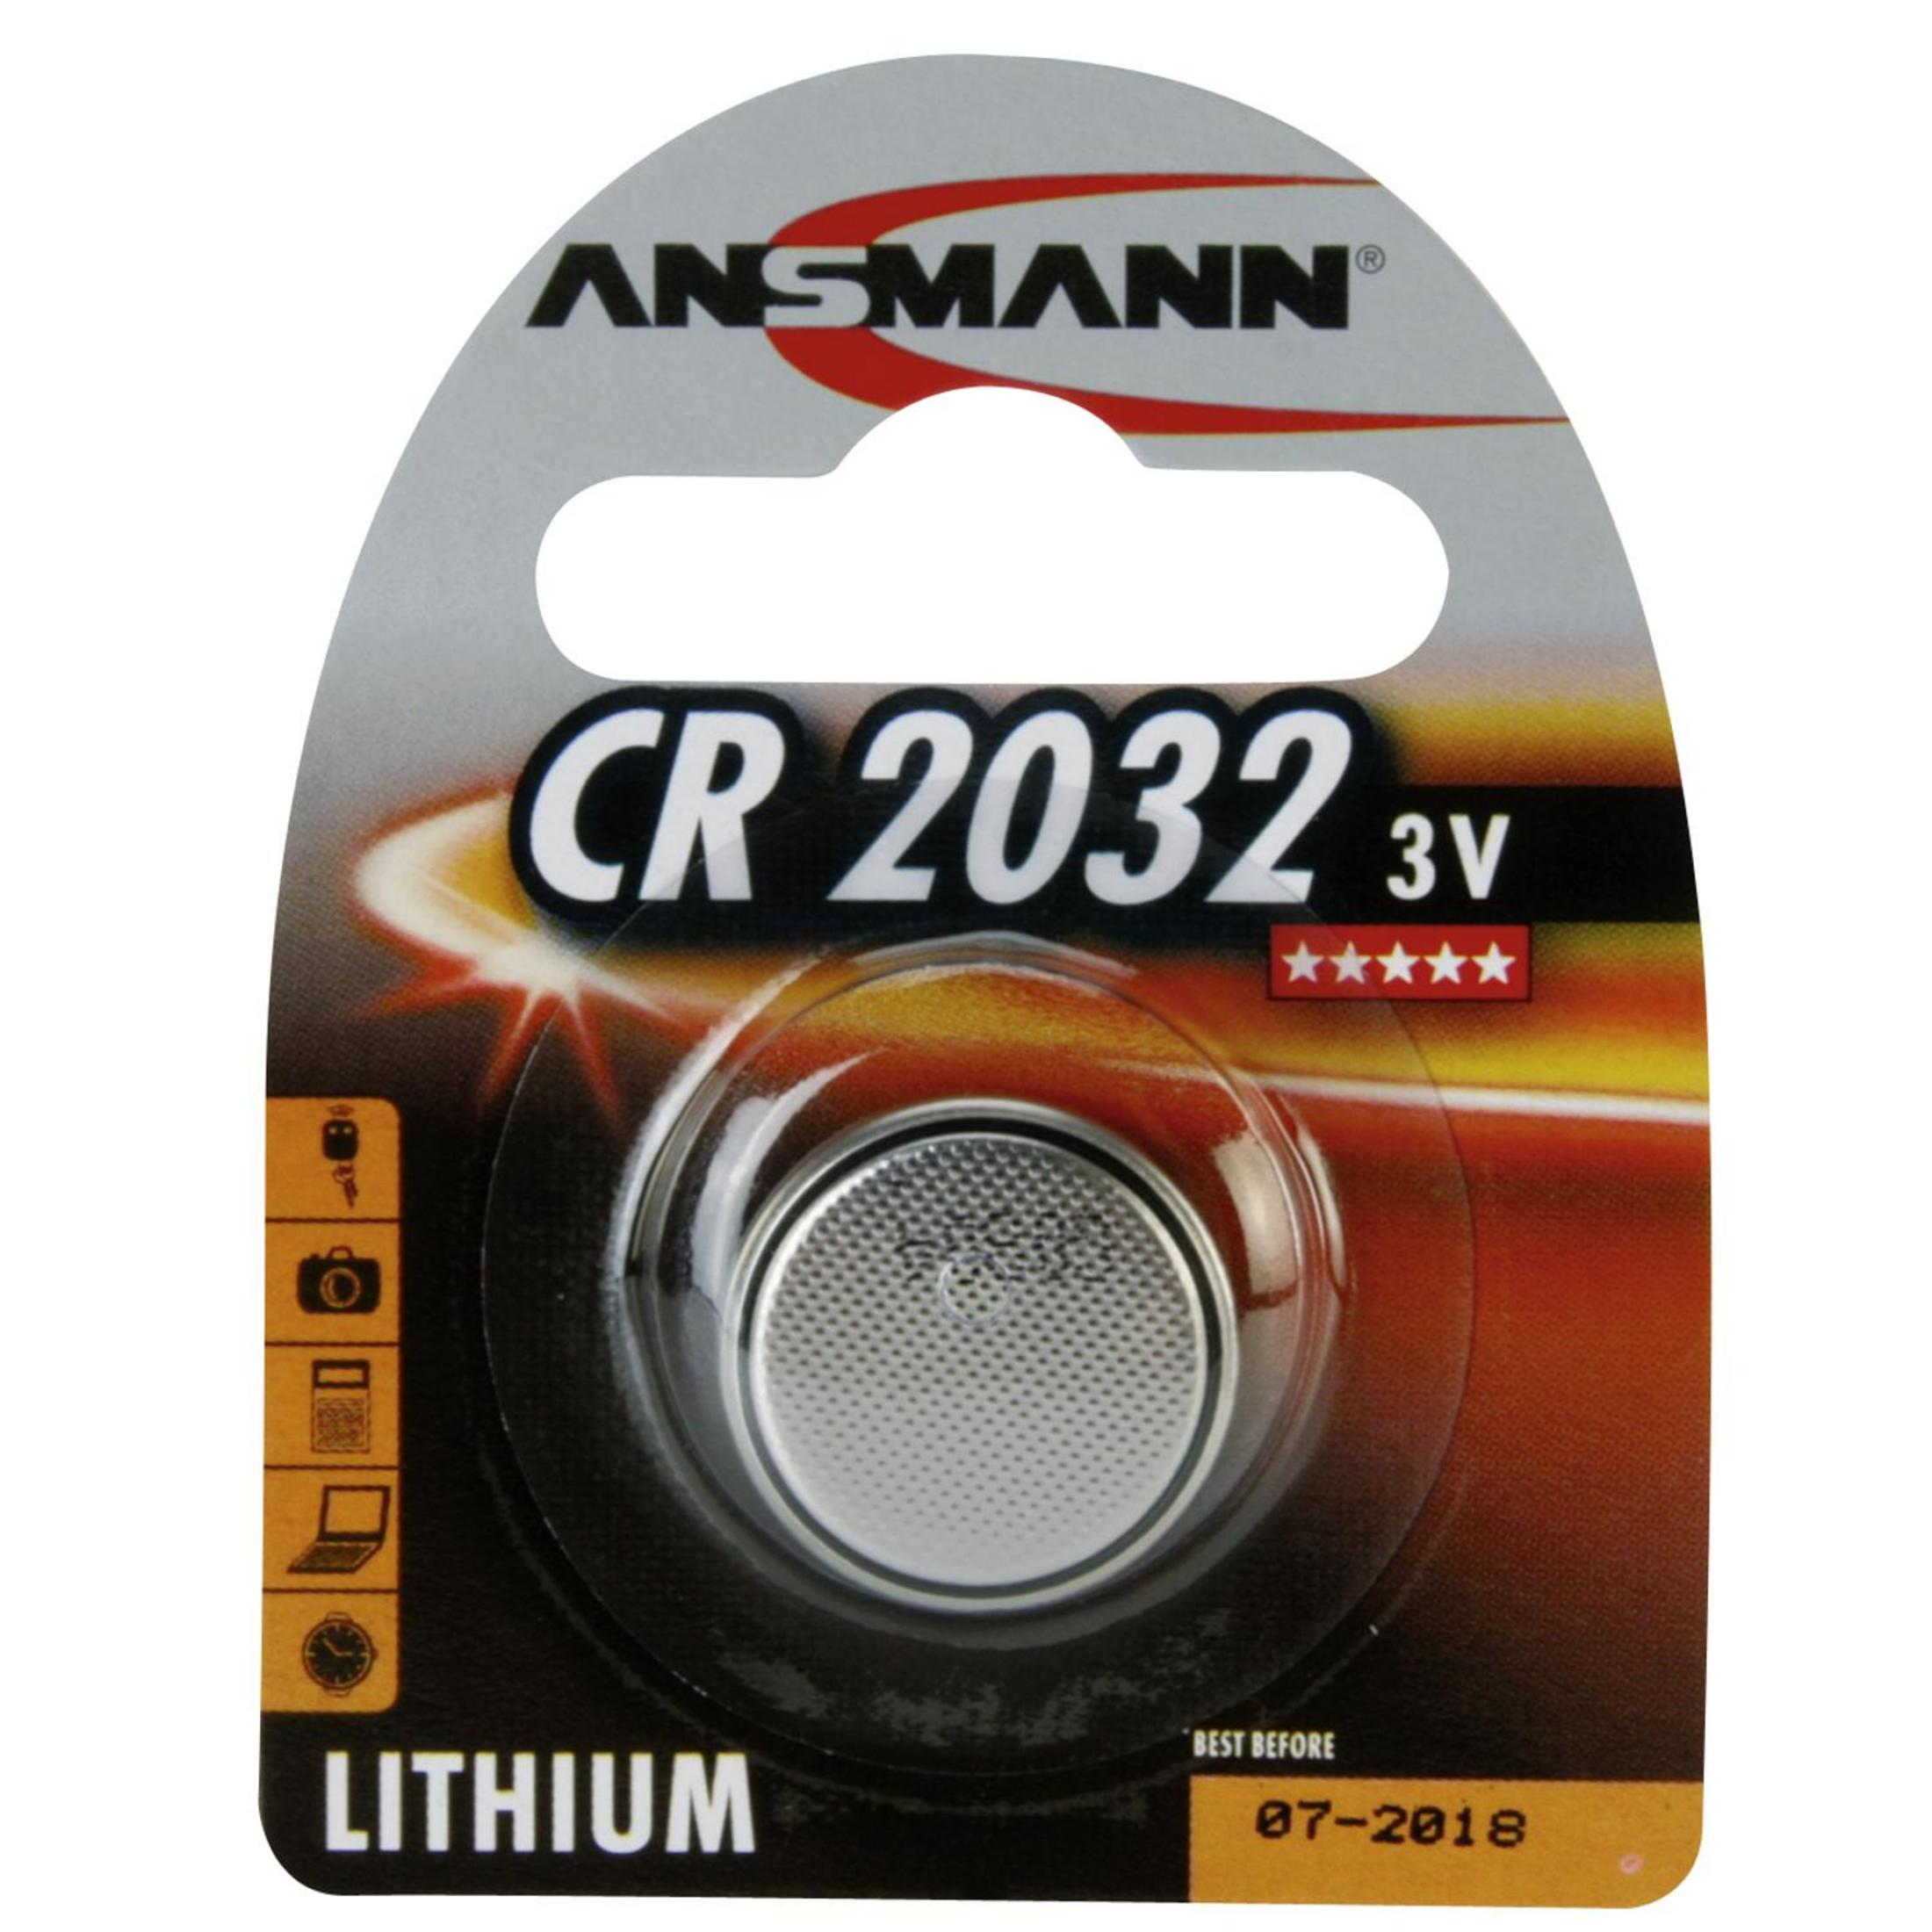 ANSMANN ANSMANN 240 Volt, Knopfzelle / Lithium, 1 3V Strom Lithium CR2032 Knopfzellen, mAh 3 5020122 Stück Knopfzellen Mainboardbatterie